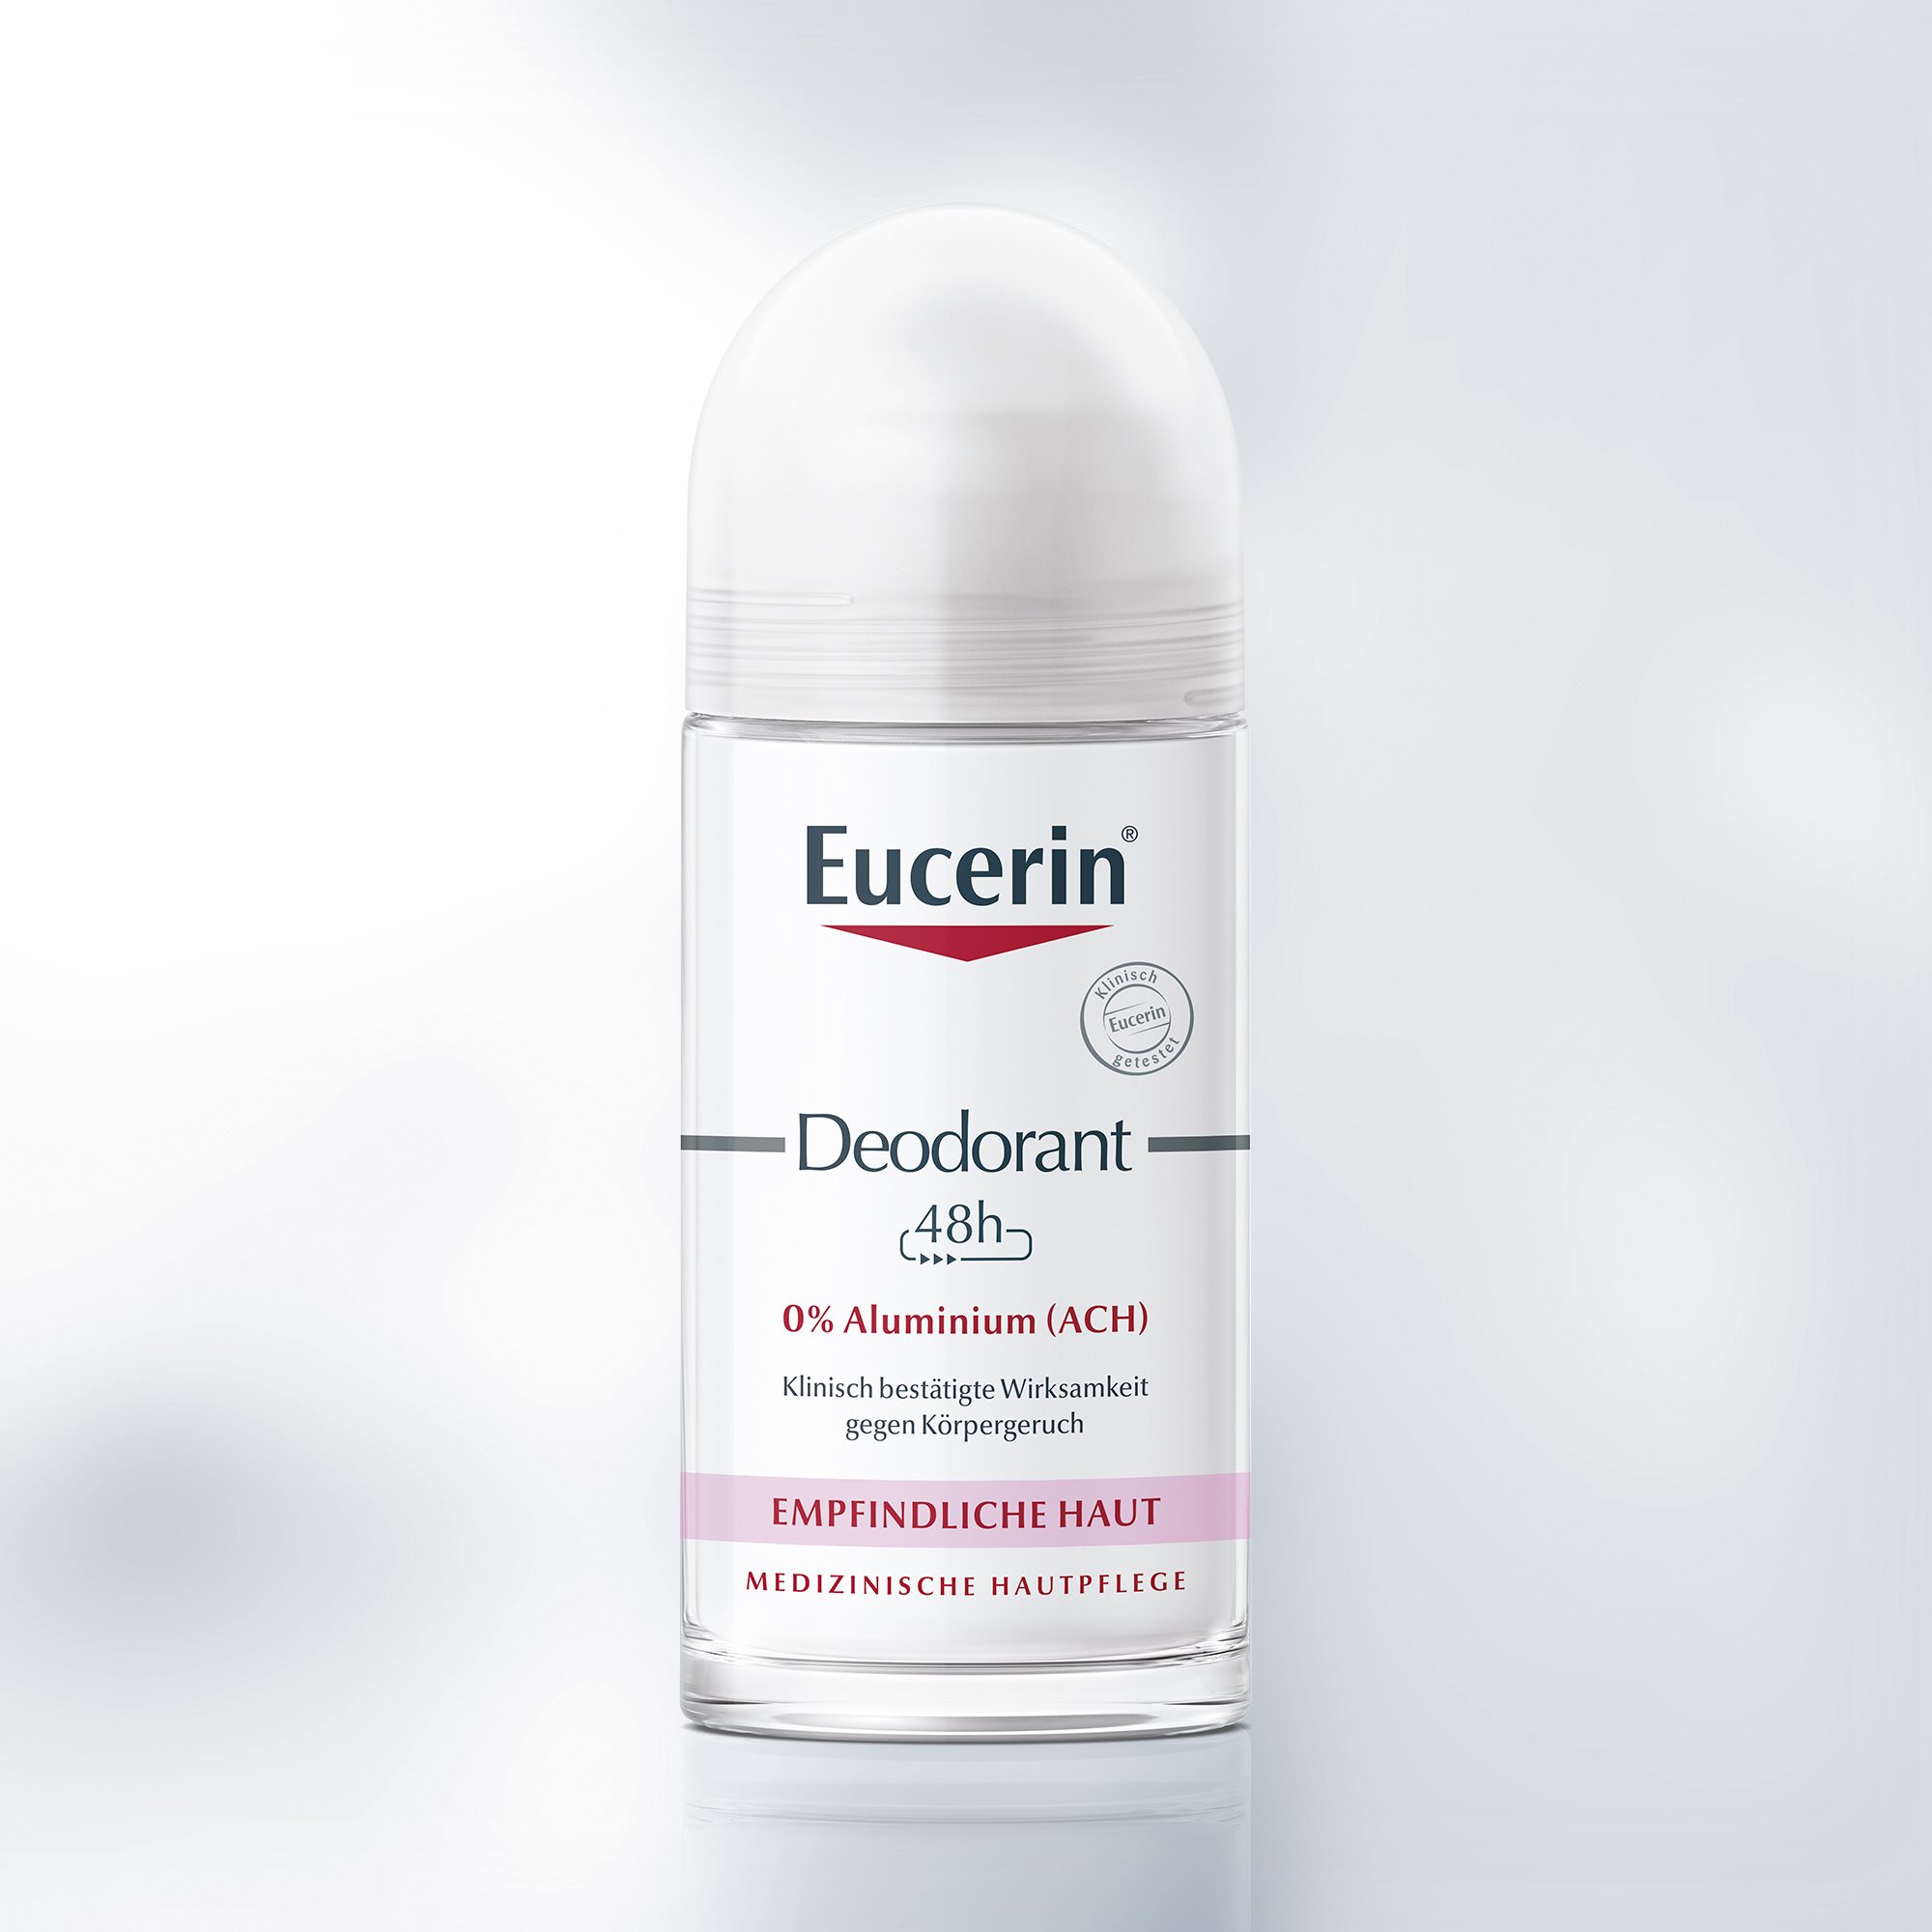 Eucerin Deodorant Roll-on Empfindliche Haut 48 h 0% Aluminium